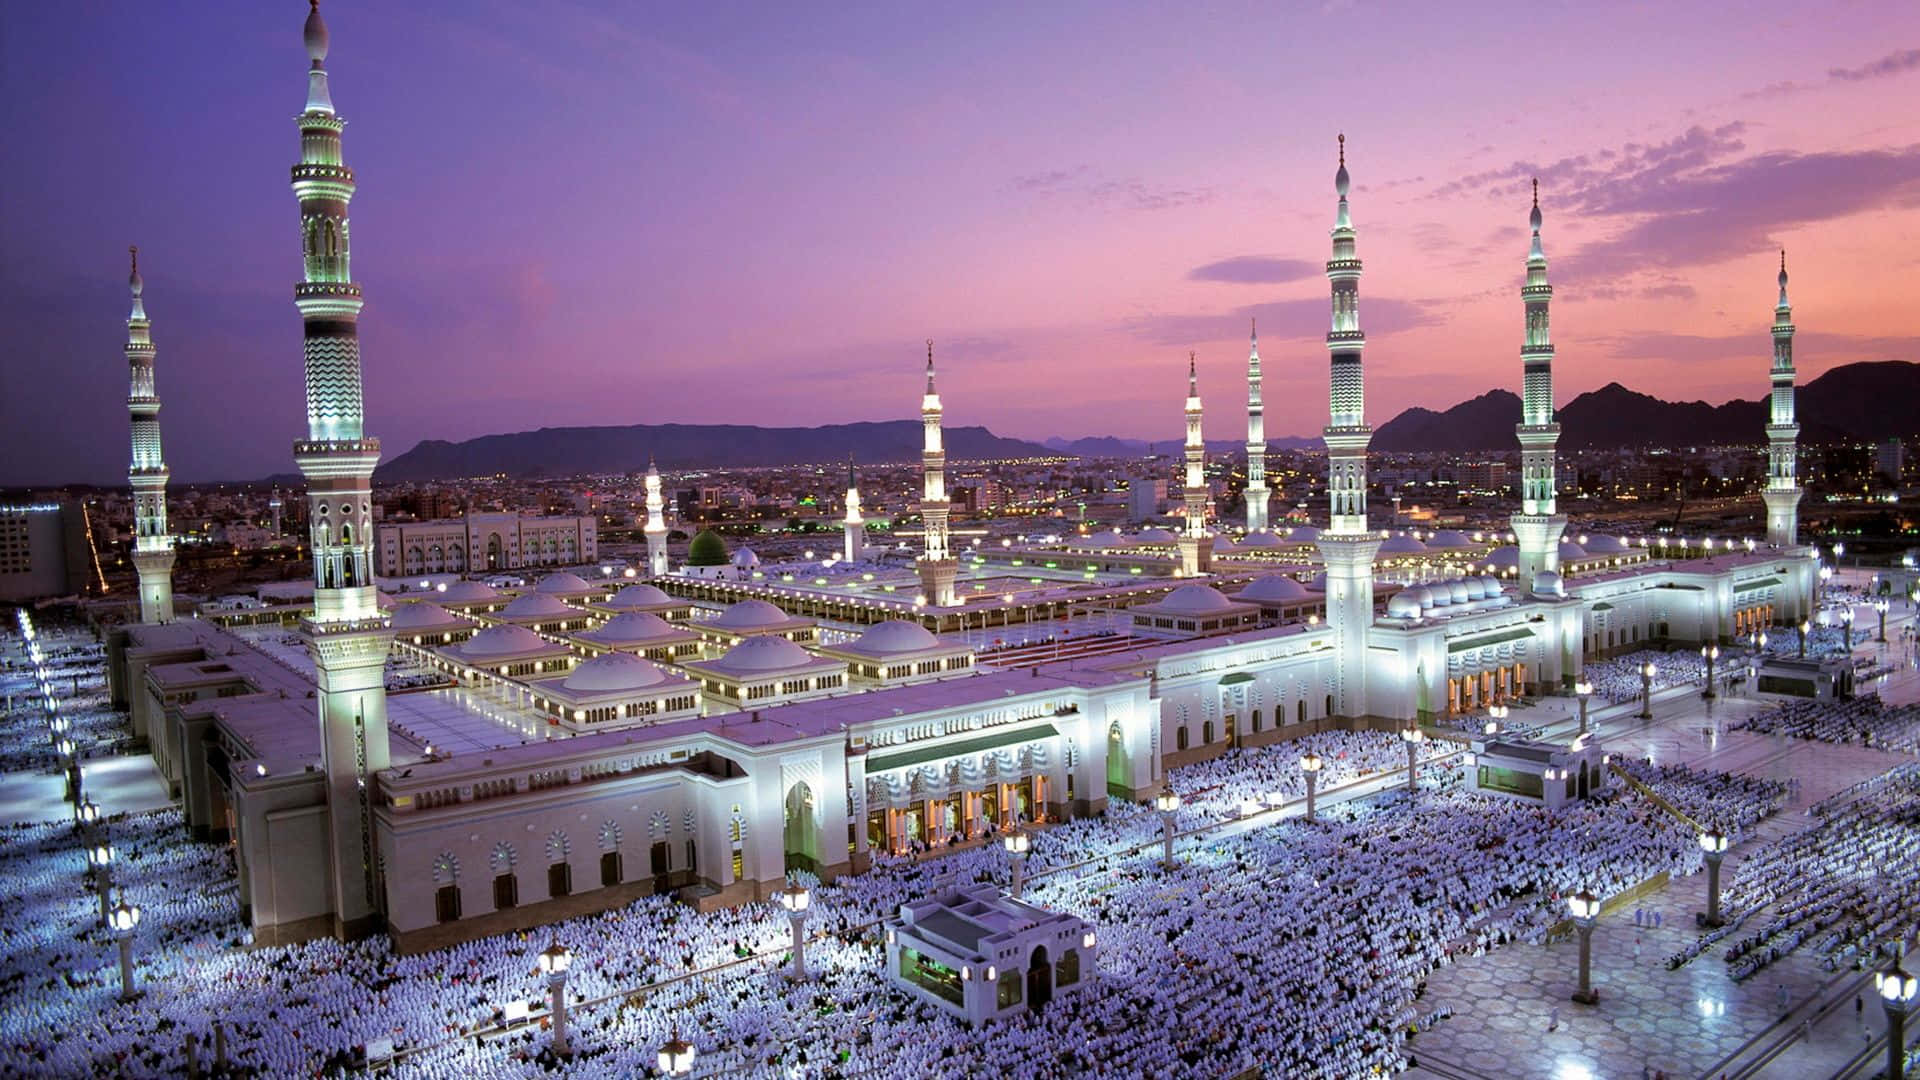 Kaaba at Masjid al-Haram (Grand Mosque) in Makkah